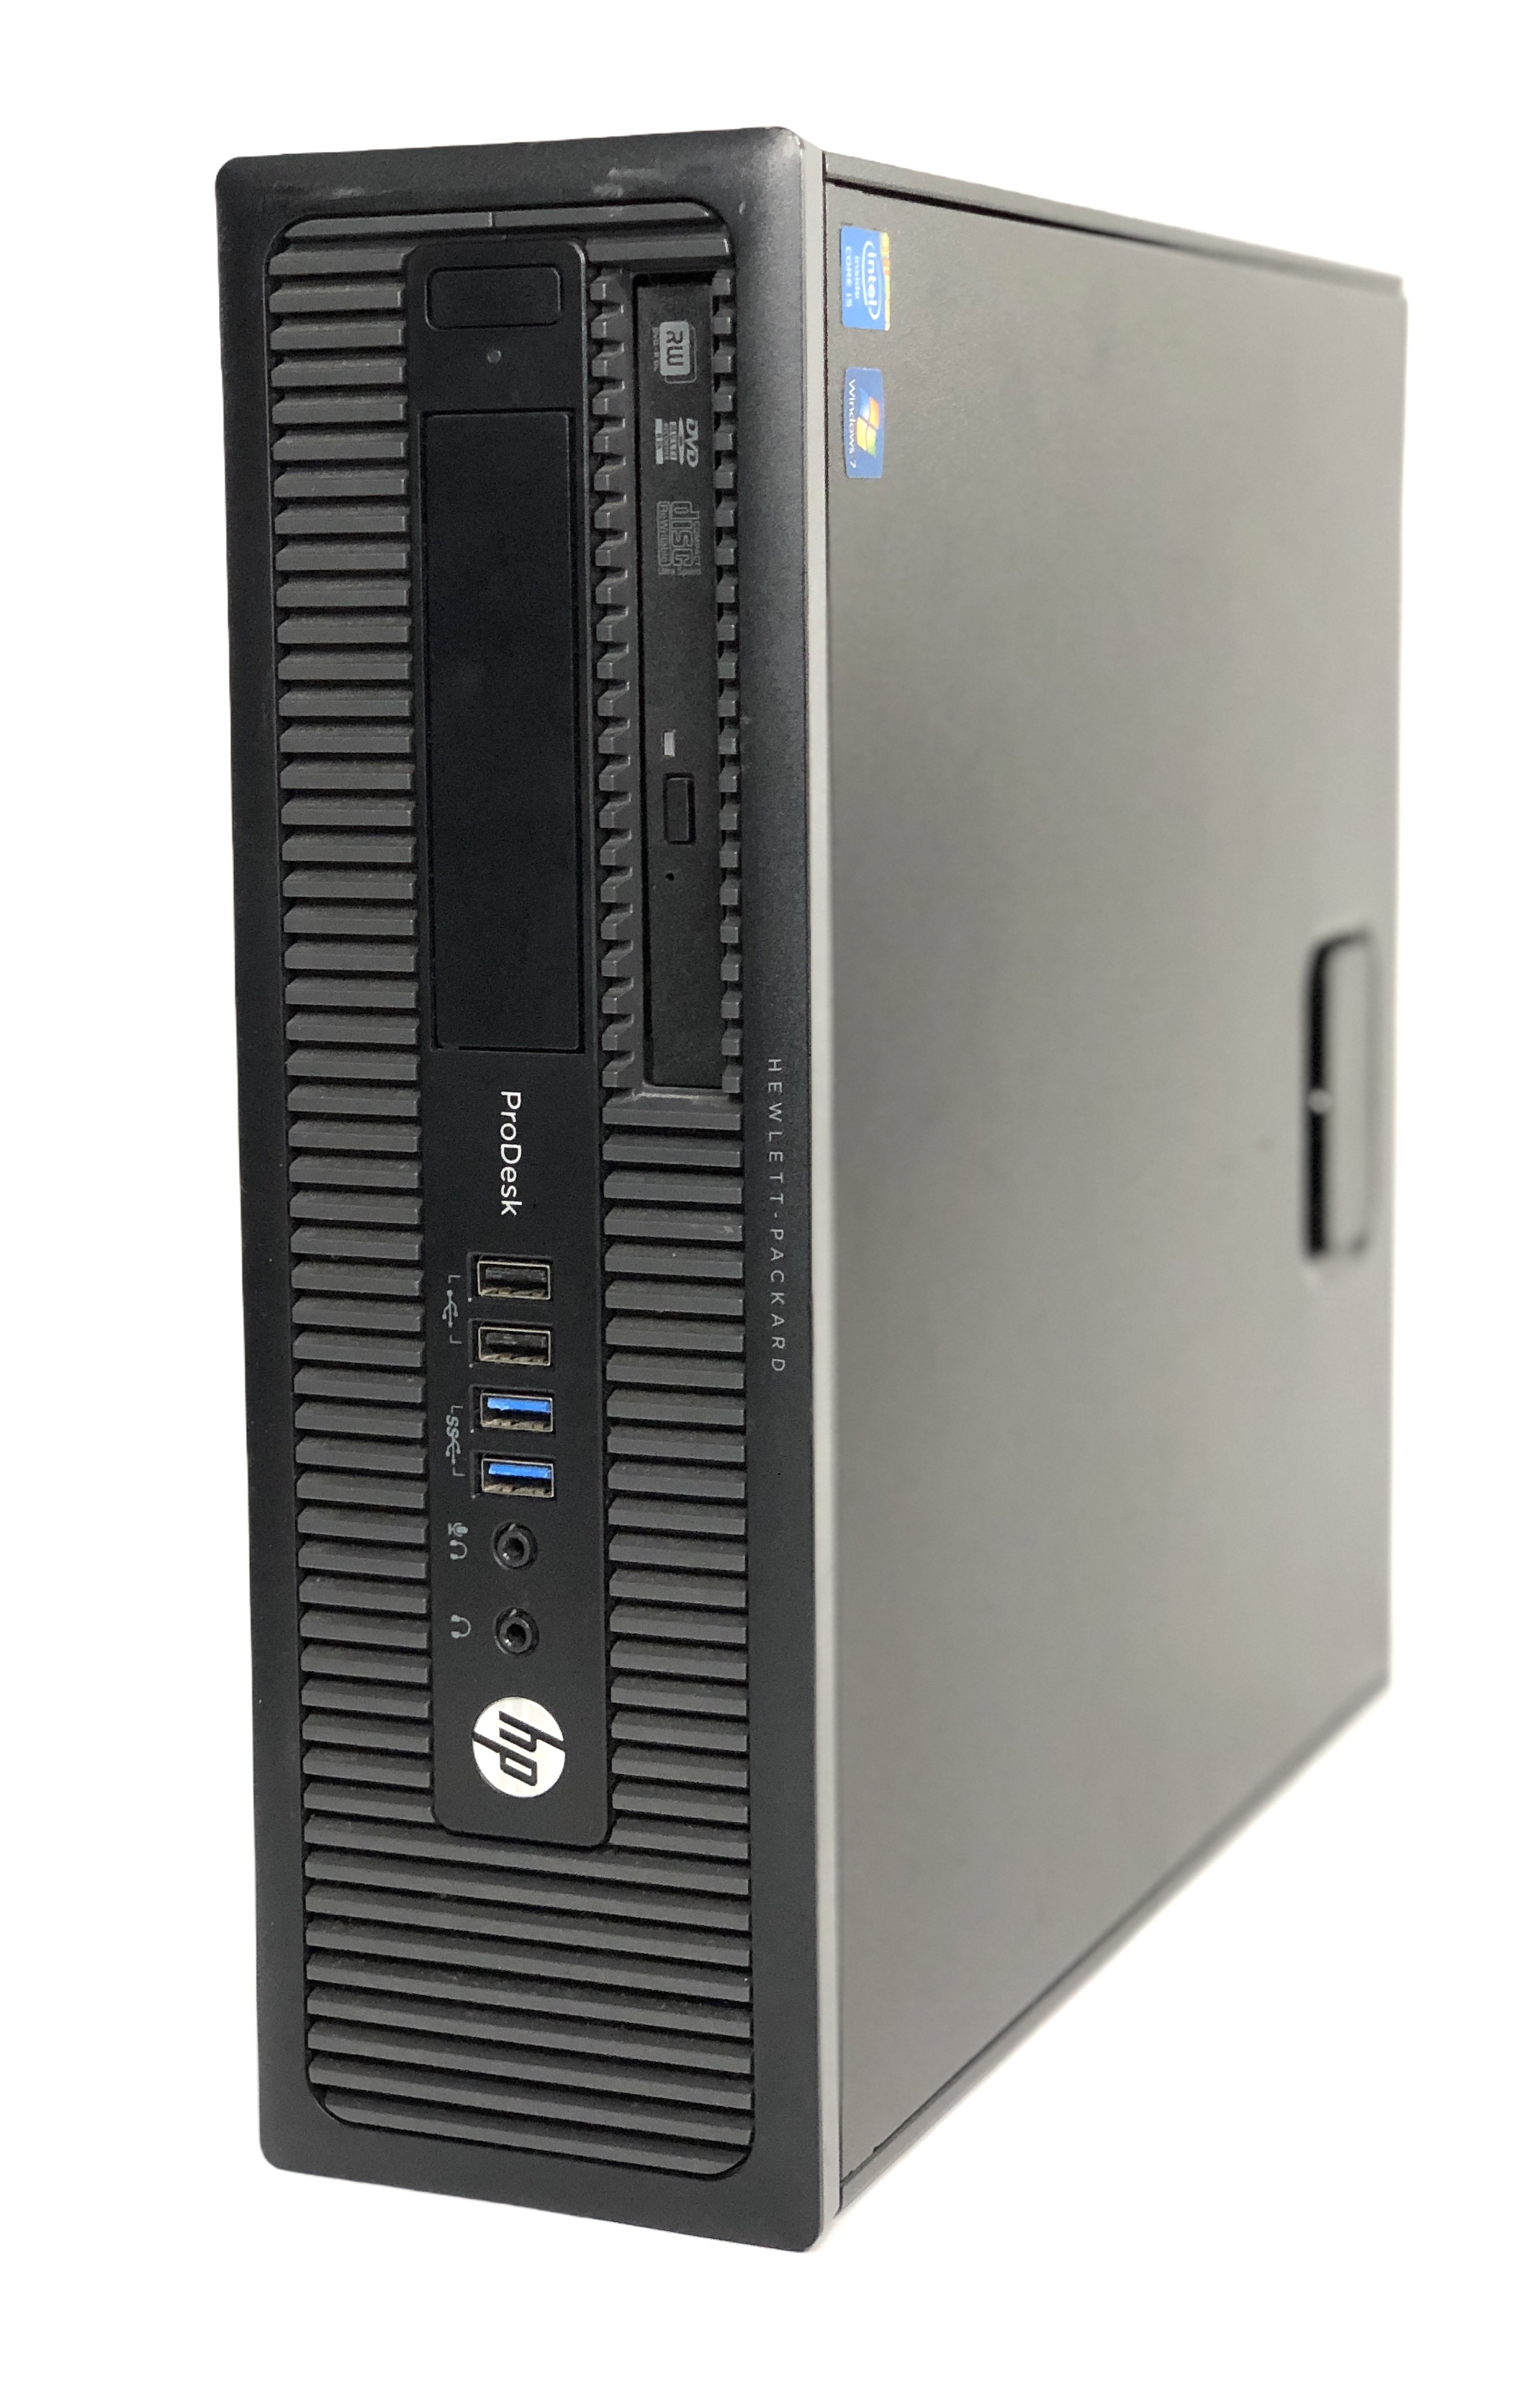 HP ProDesk 600 G1 Desktop SFF, Intel Core i5-4590 3.3GHz, 8GB DDR3 Ram, 500GB HDD, Windows 10 Pro - image 1 of 5